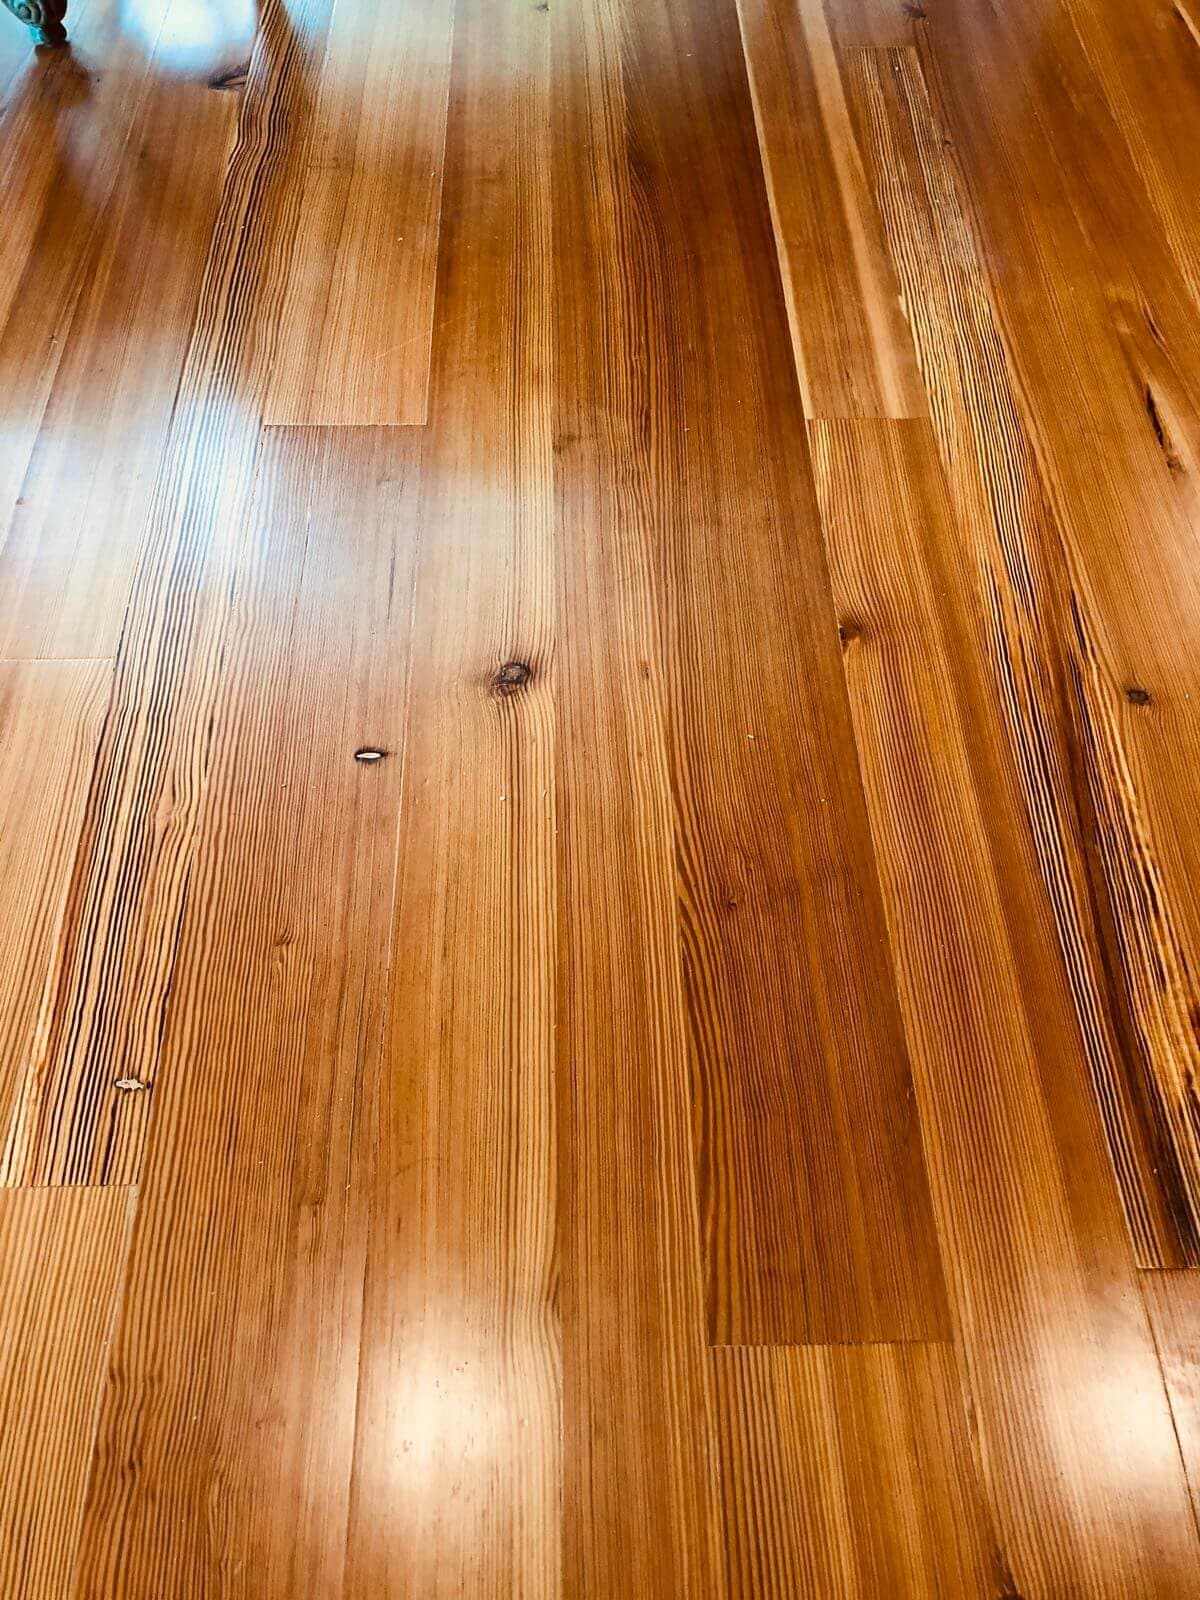 Heart pine hardwood flooring close up.